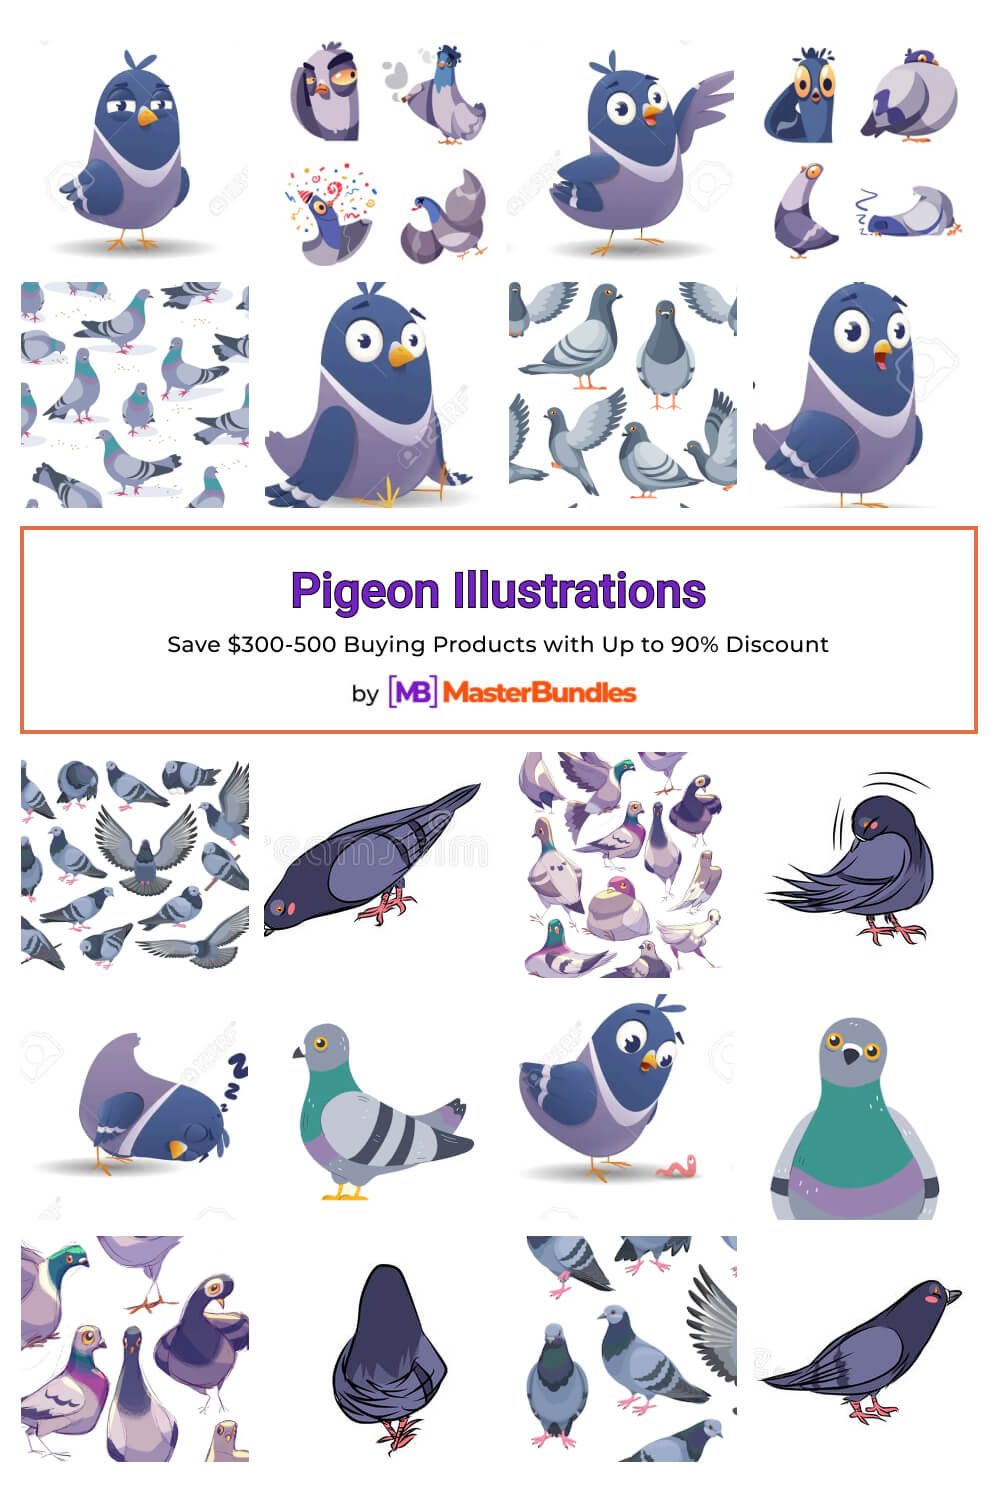 pigeon illustrations pinterest image.